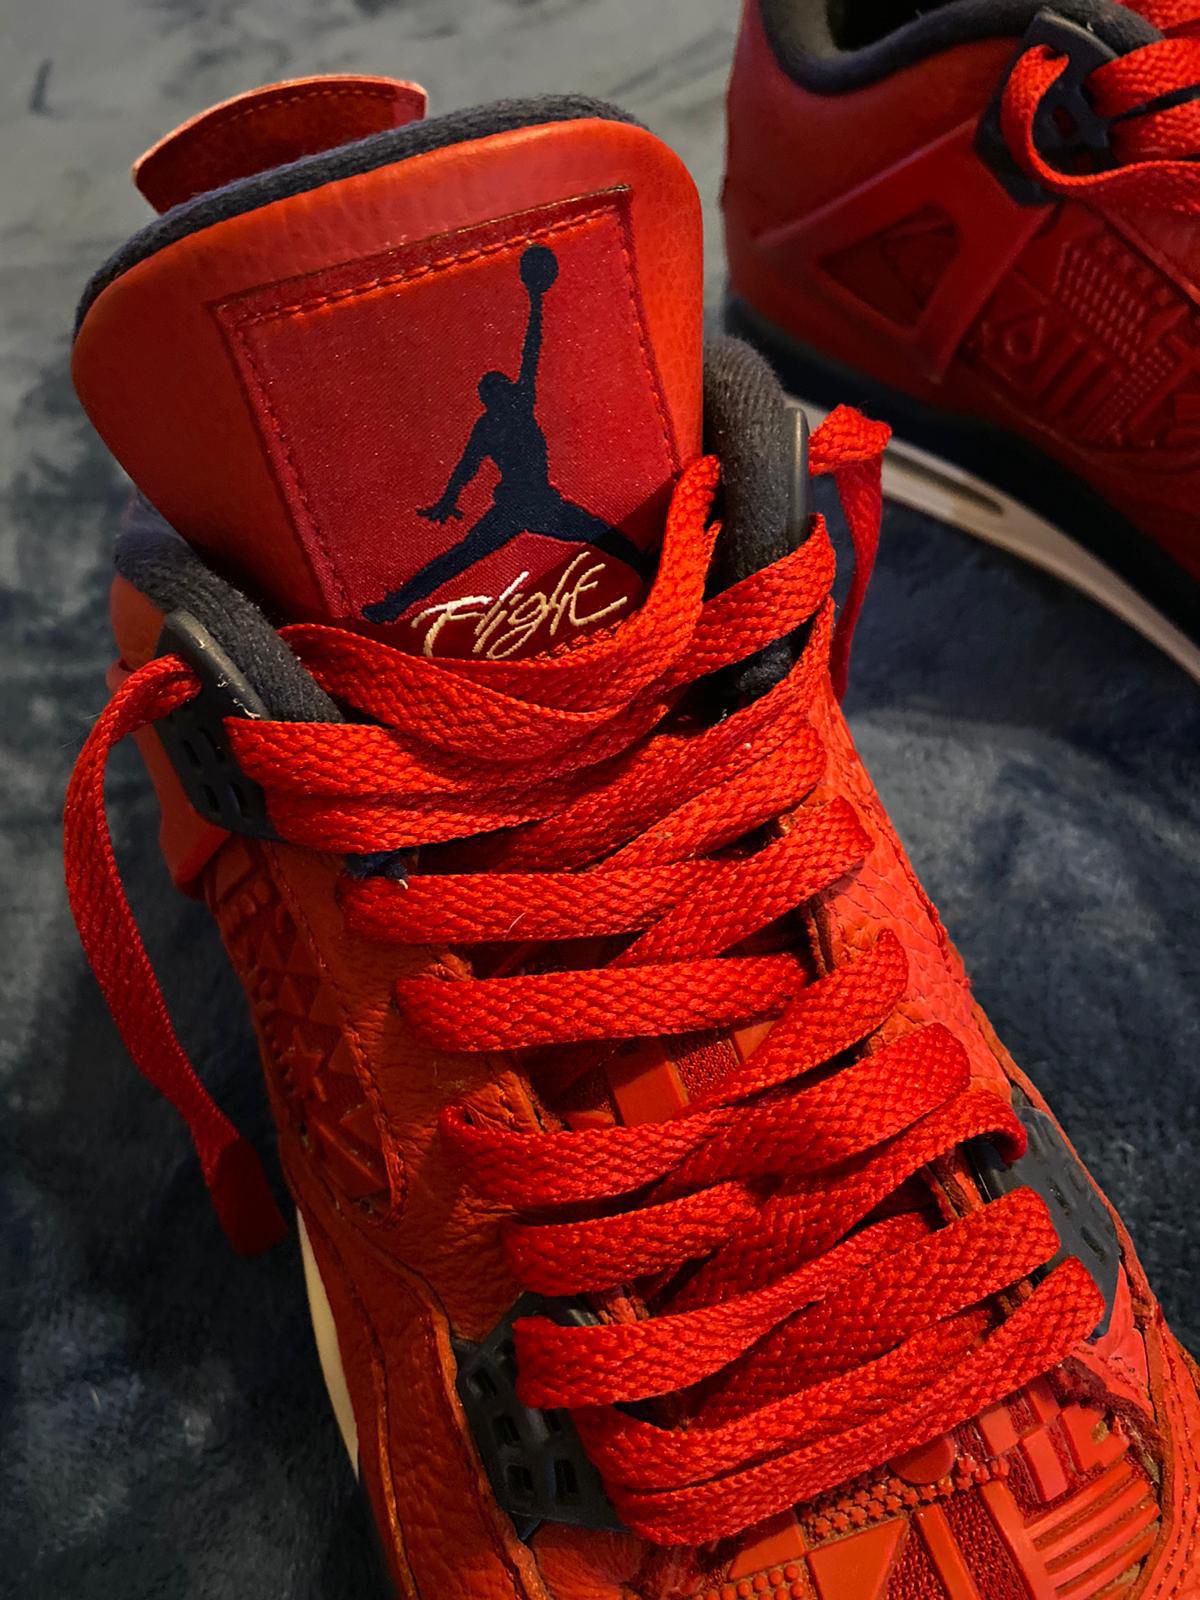 Air Jordan 4 Fiba Red / Size 12